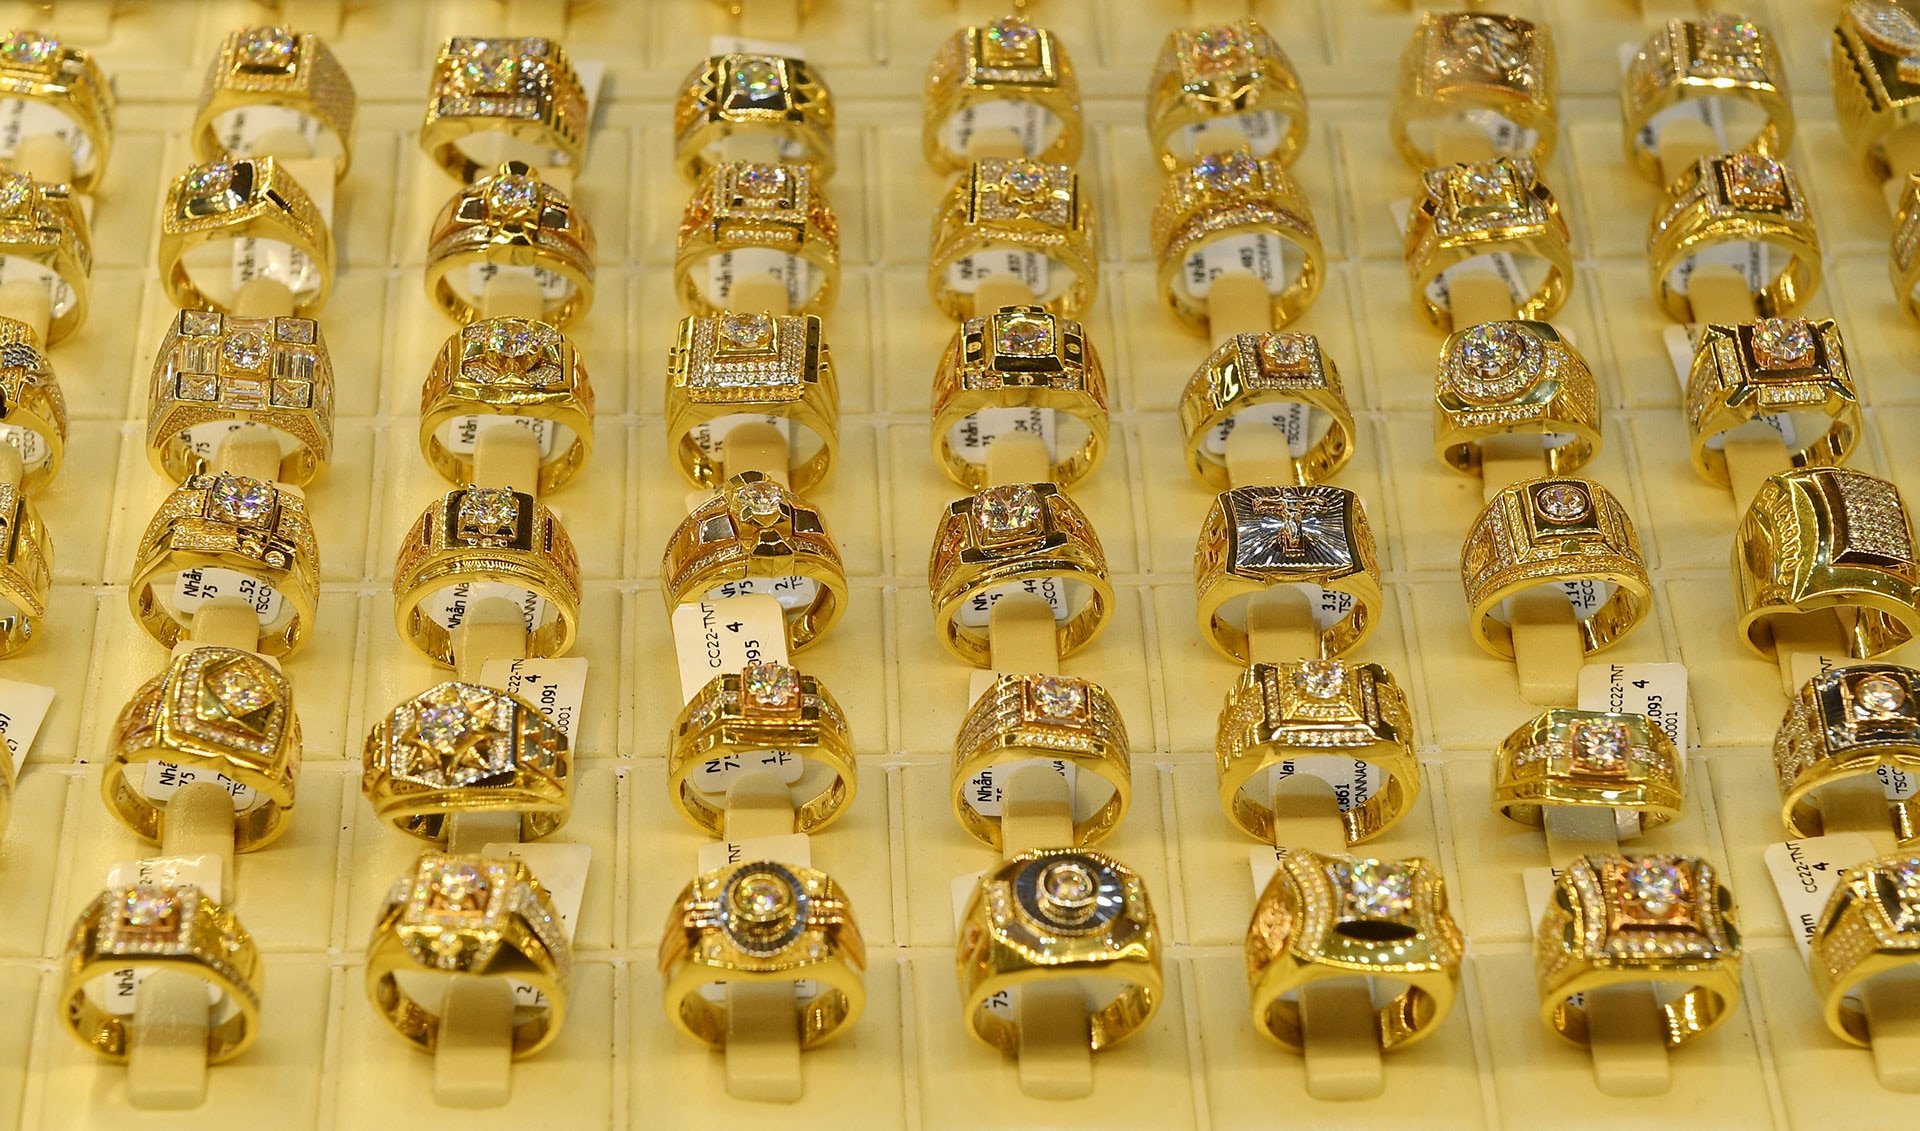 18k gold two tones SPARKLING ring #64 | eBay